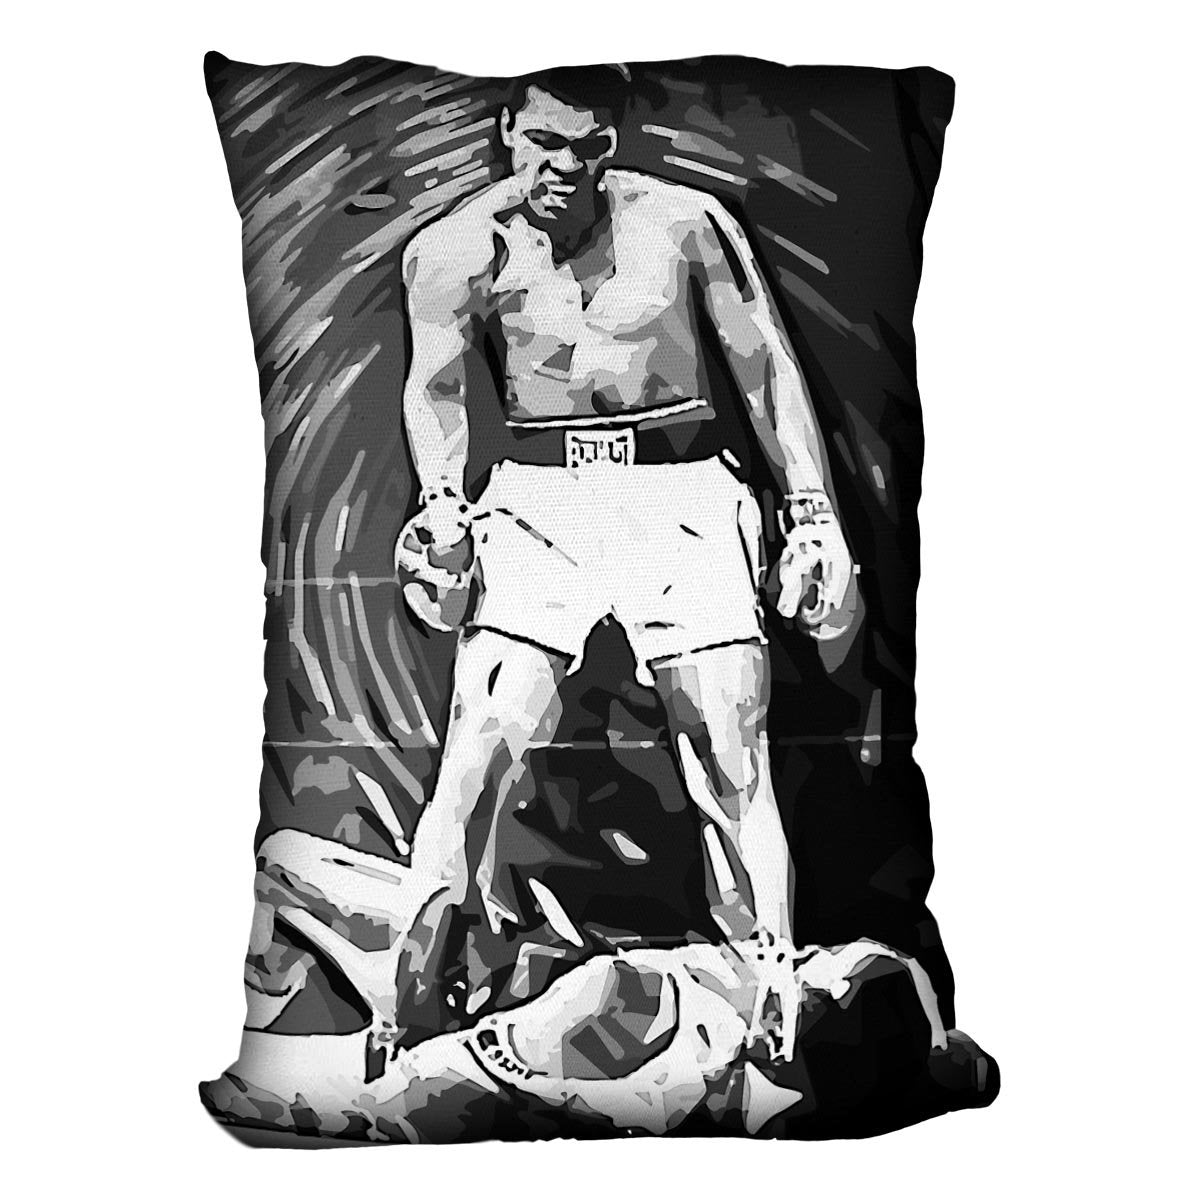 Muhammad Ali Pop Art Cushion